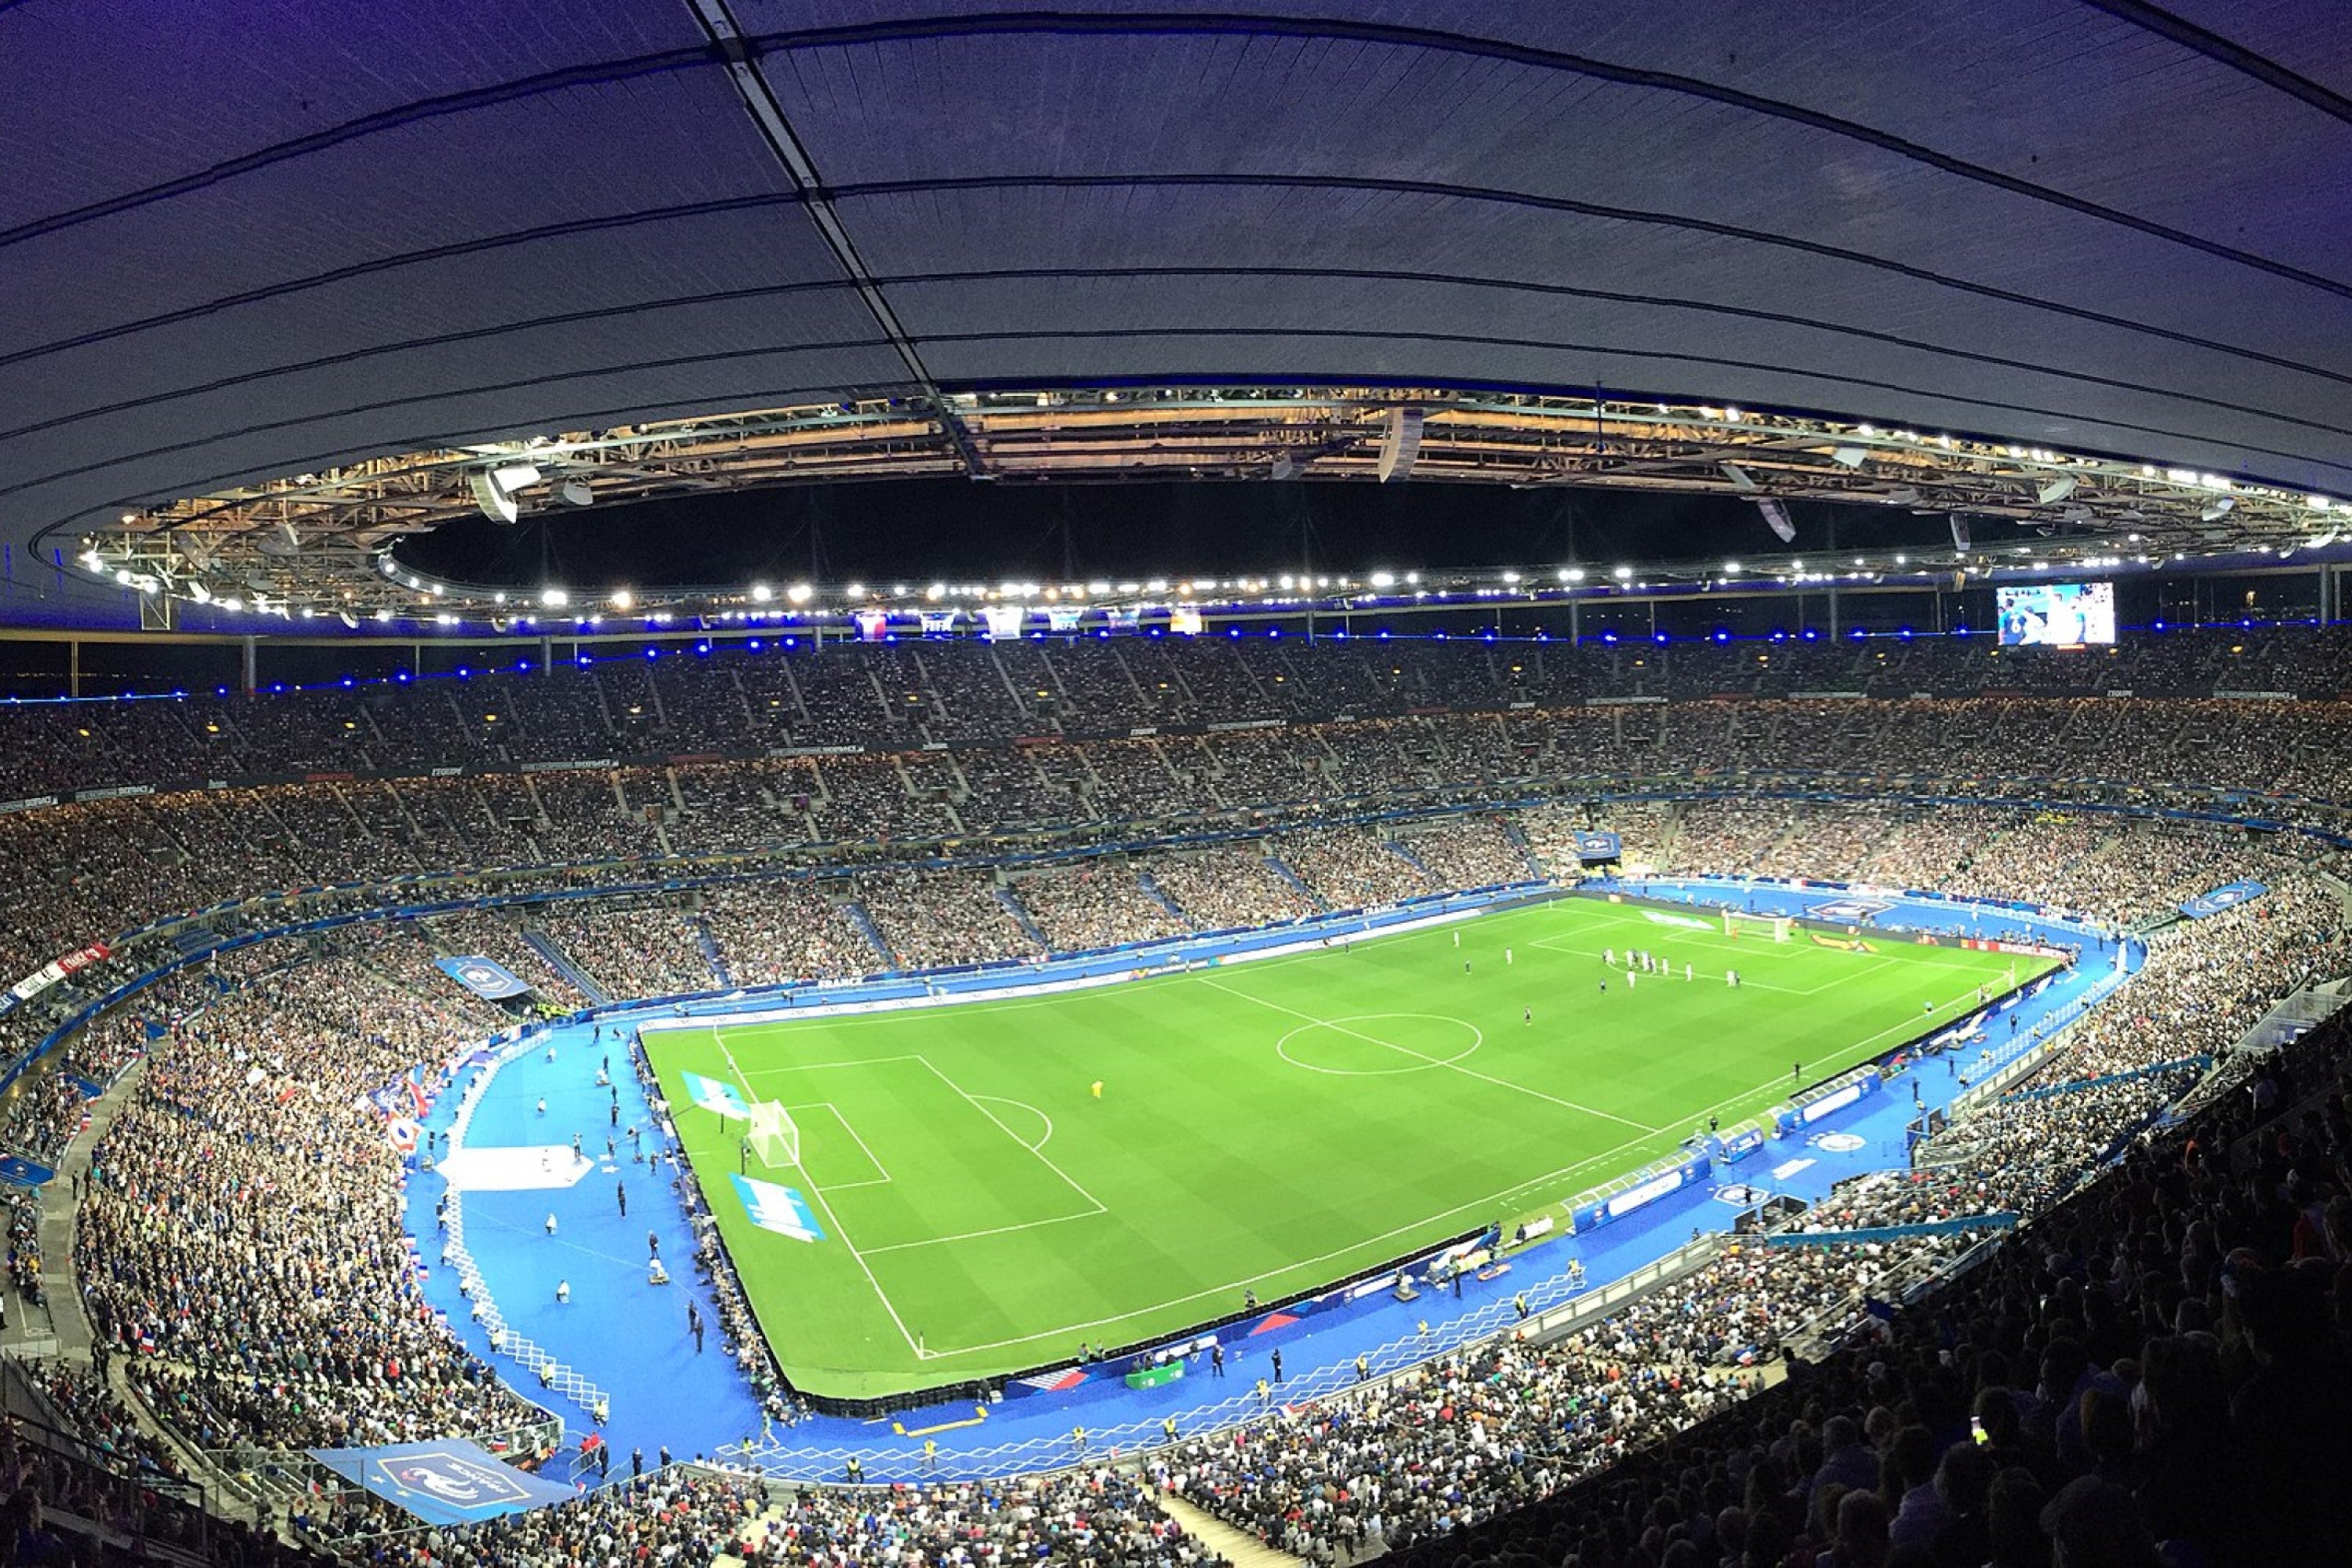 Das Stade de France wird das Finale der UEFA Champions League 2022 ausrichten